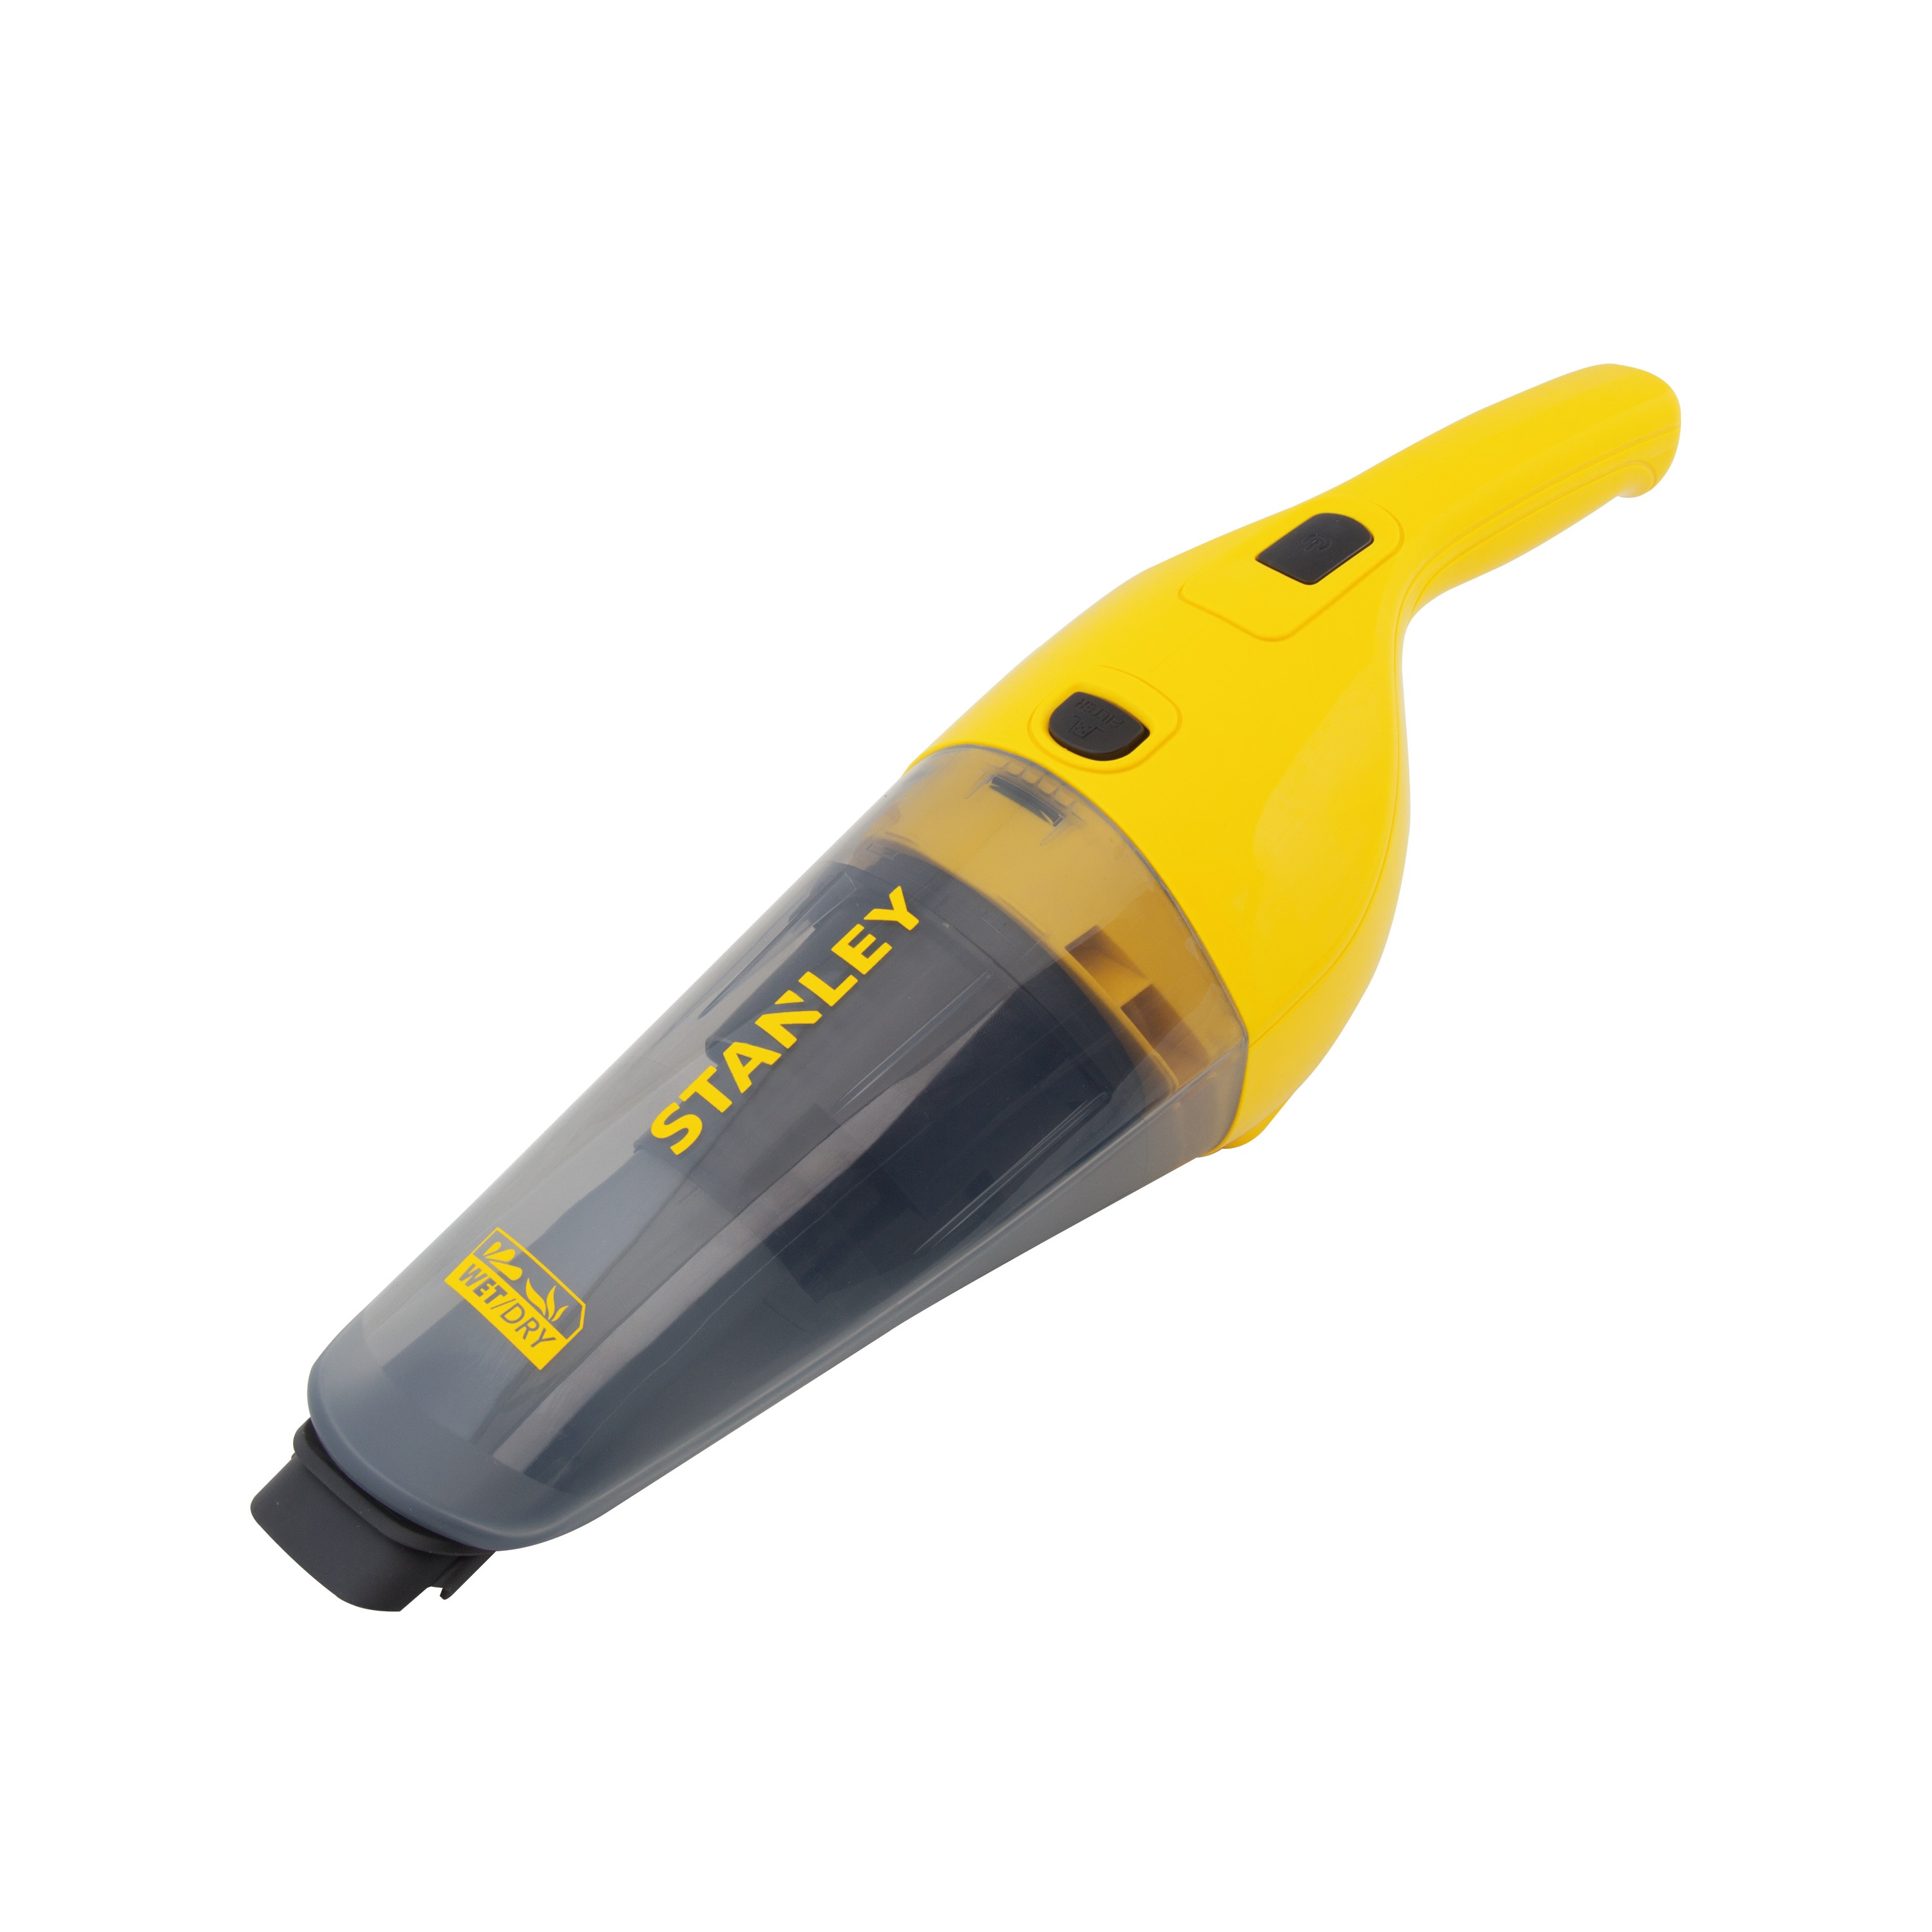 Stanley Tools - Cordless Handheld WetDry Vacuum - STHV215BW